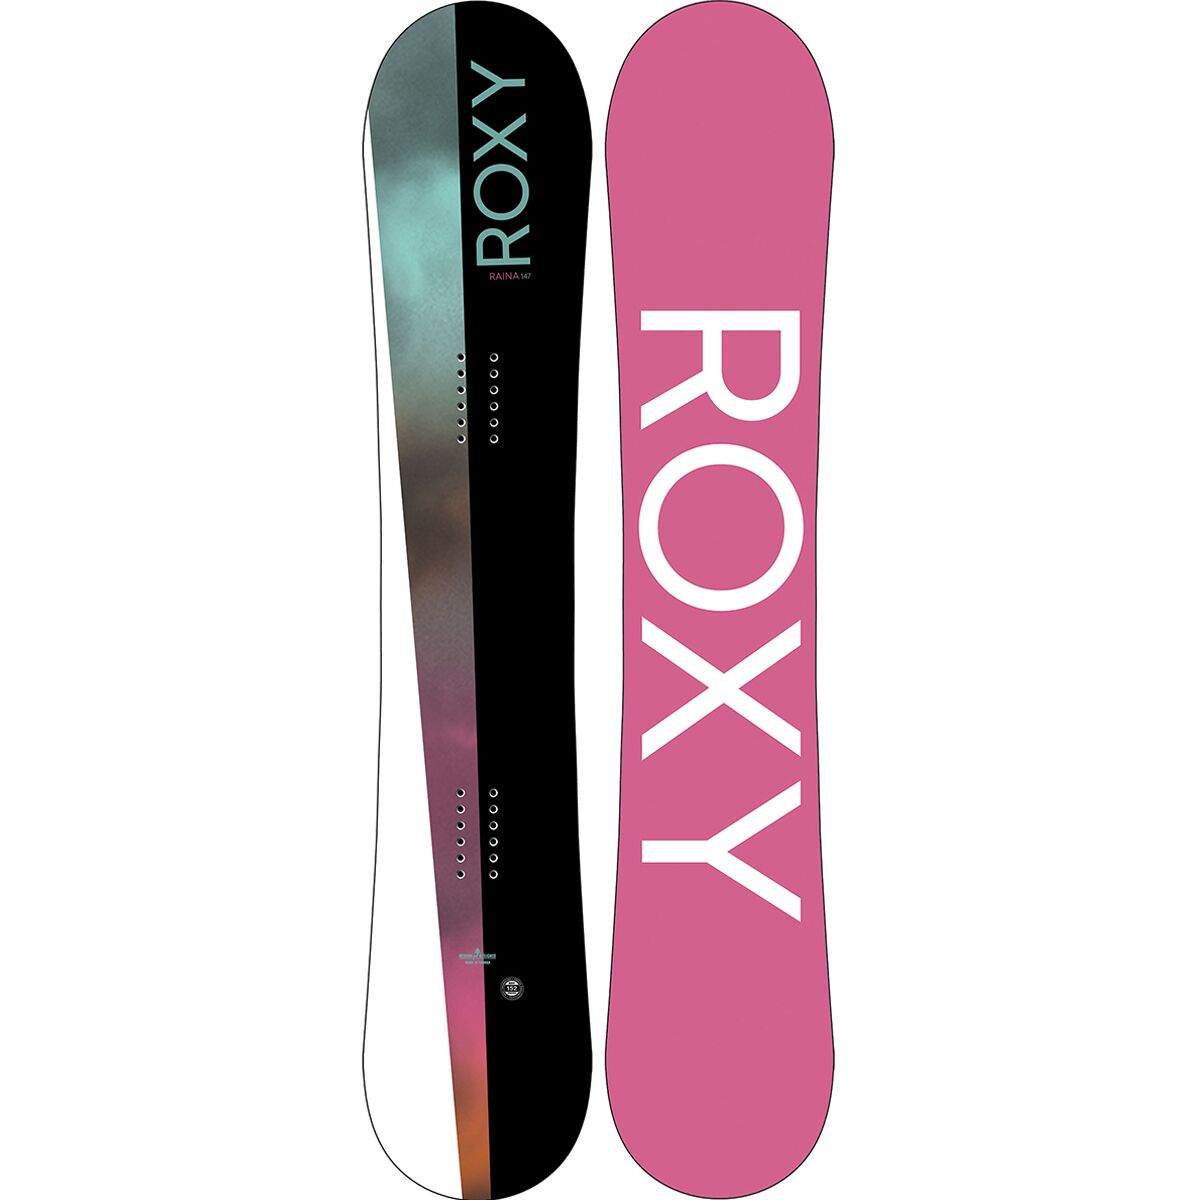 Roxy Raina Snowboard - 2022 - Women's